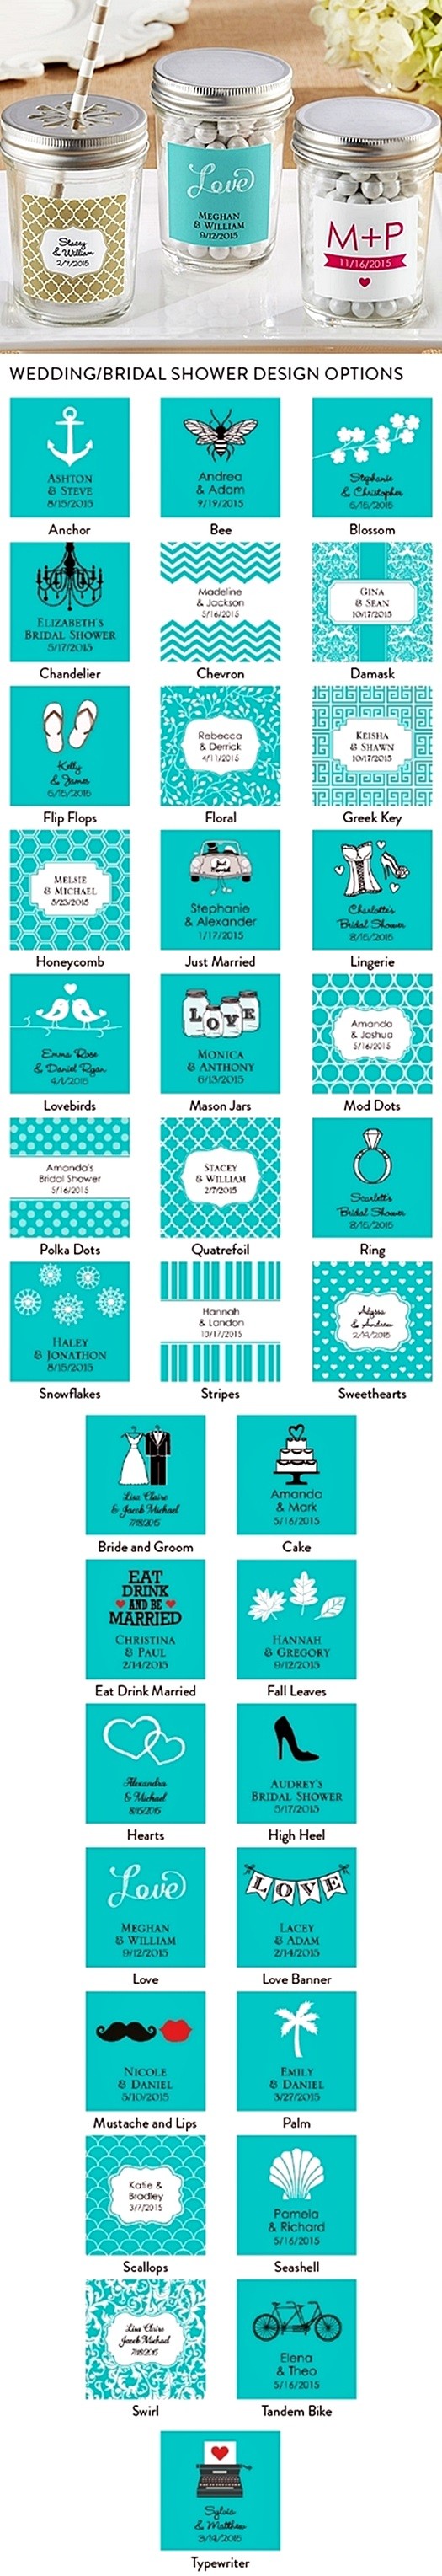 Personalized Mason Jars with Wedding/Bridal Shower Designs (Set of 12)